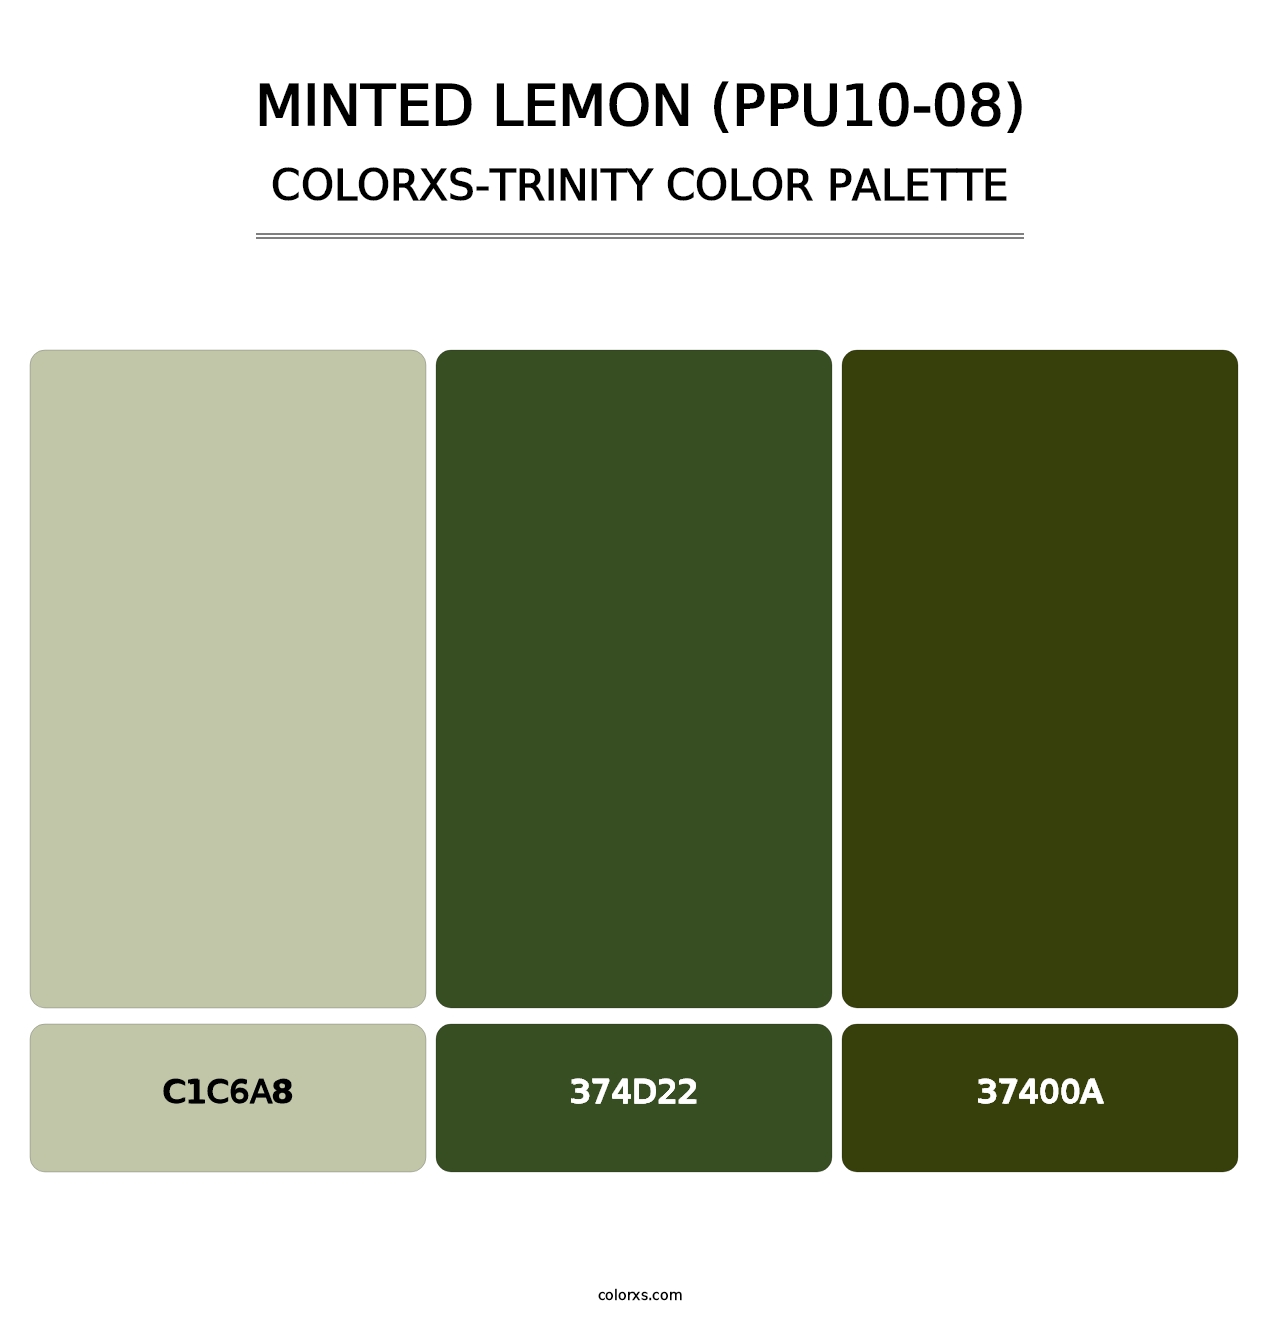 Minted Lemon (PPU10-08) - Colorxs Trinity Palette